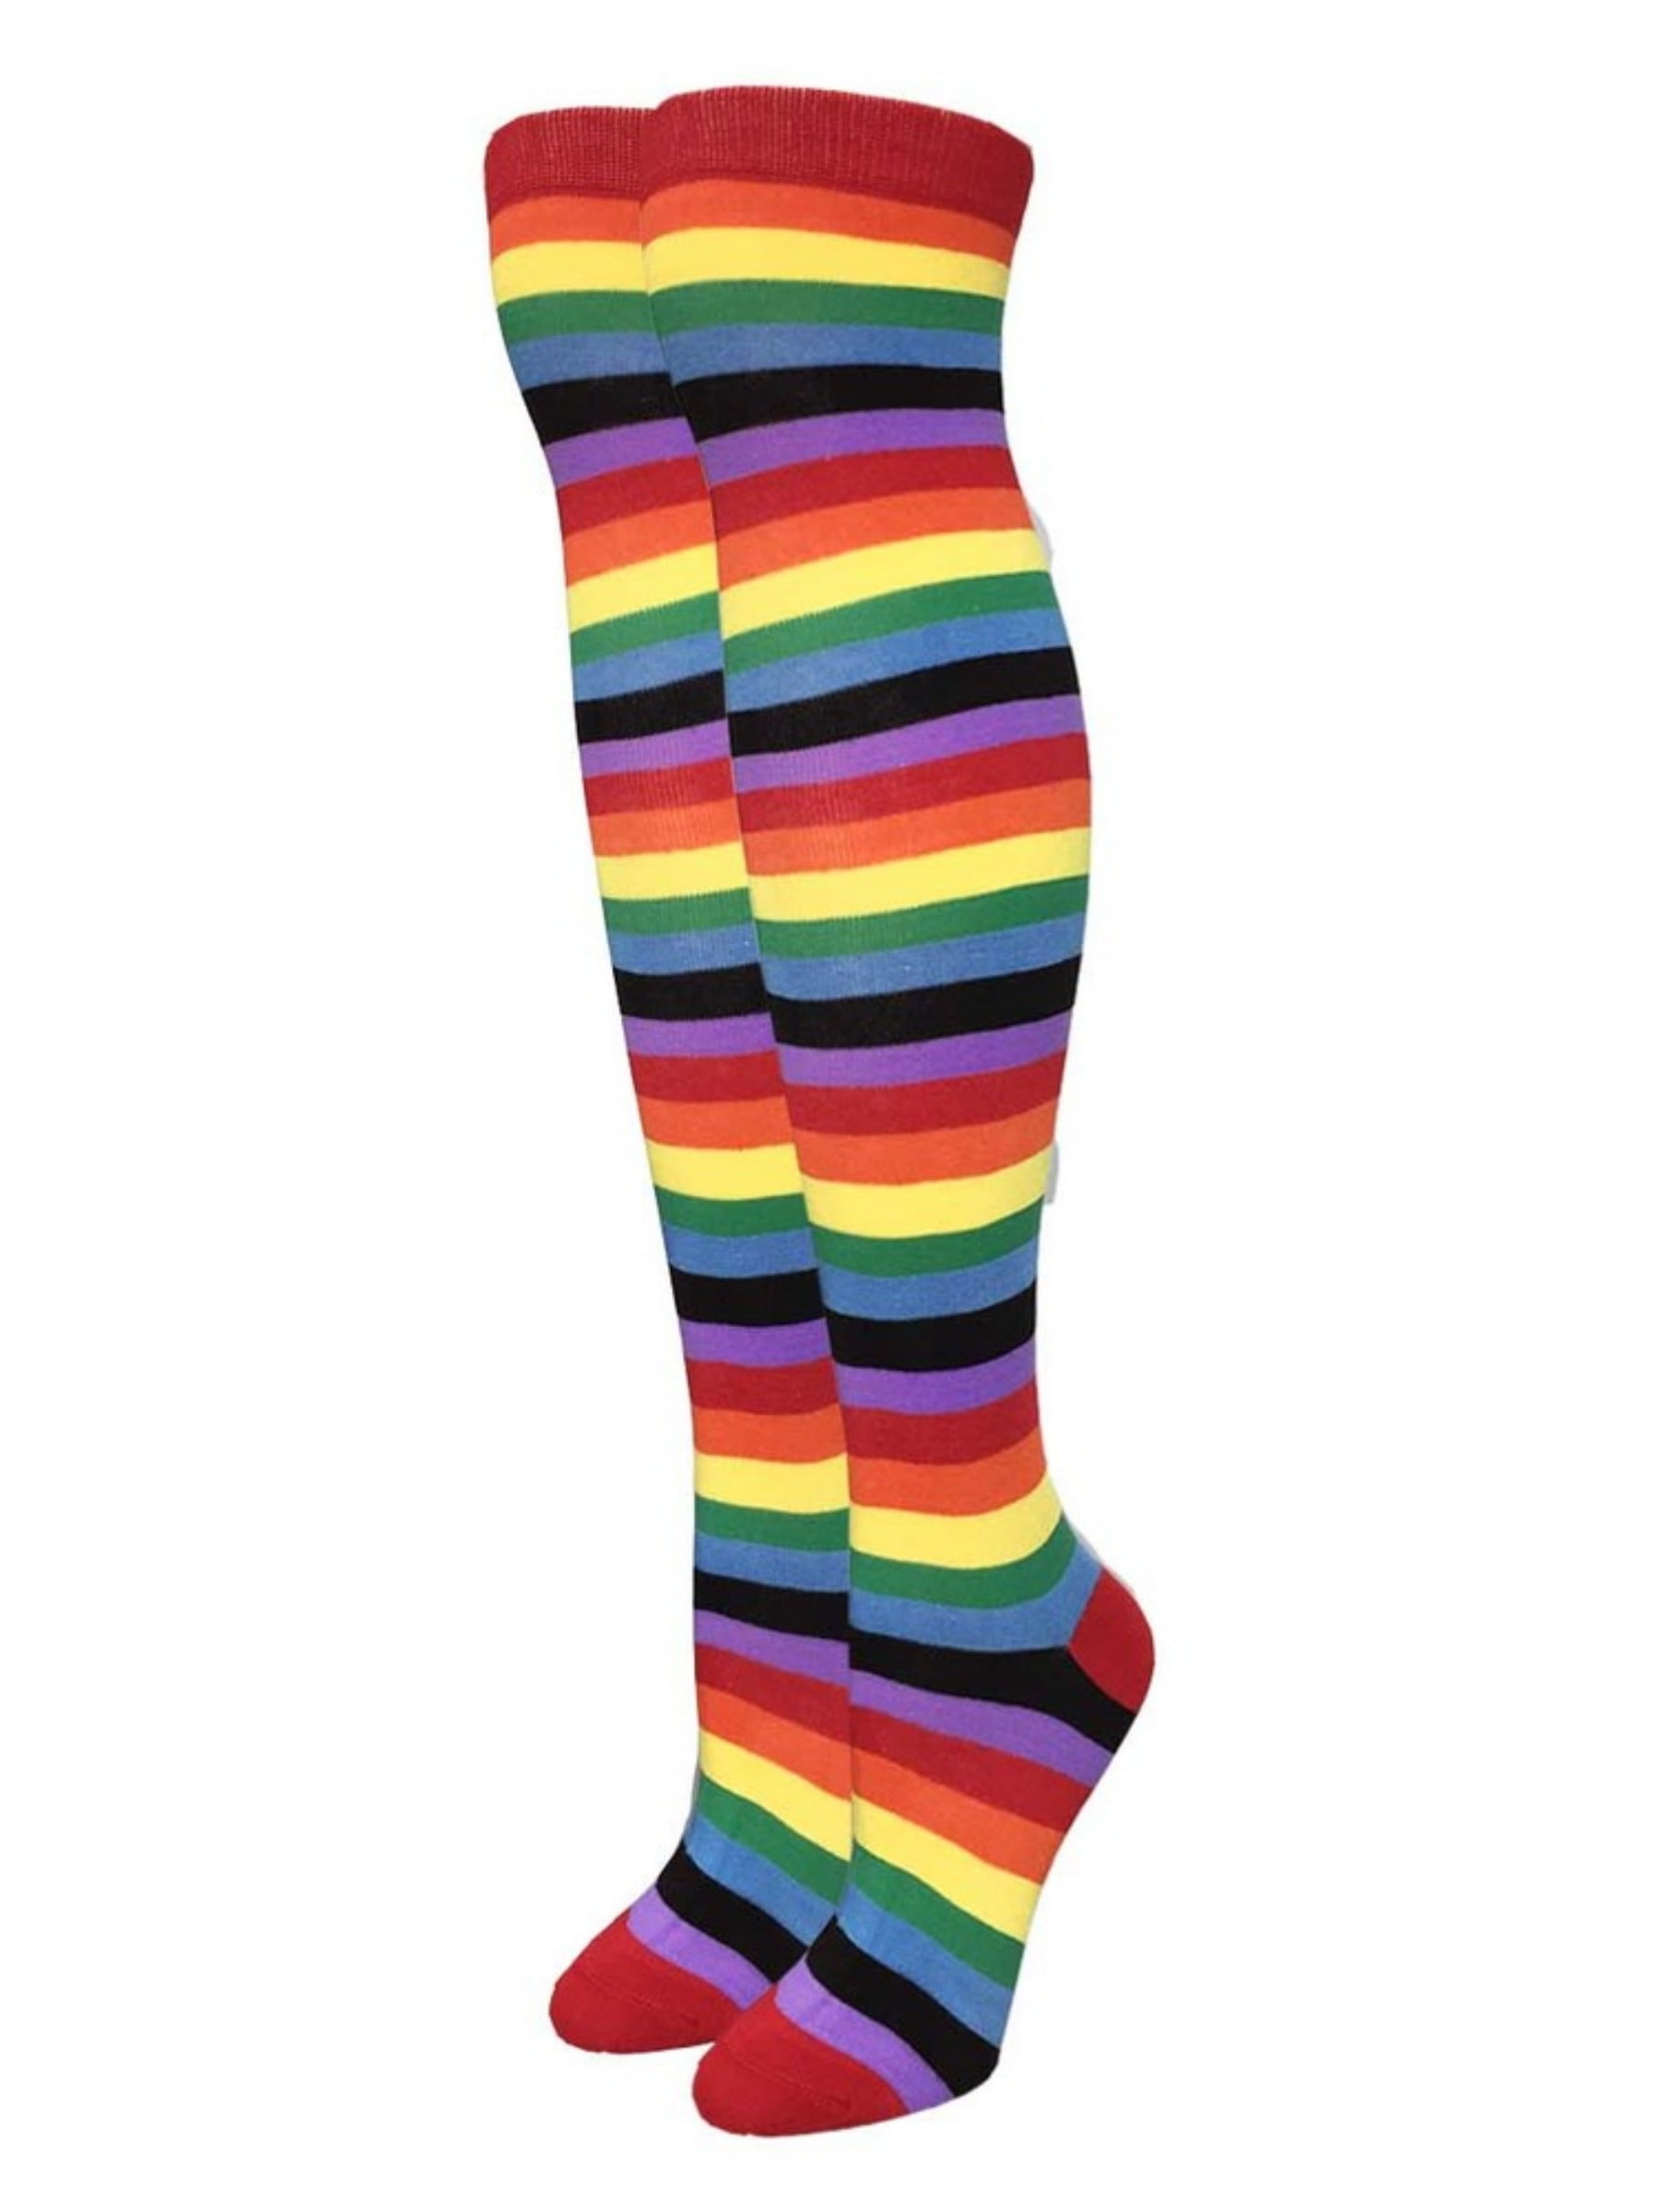 Fashion2love Women S Long Multi Color Striped Socks Over Knee Thigh High Socks Stocking